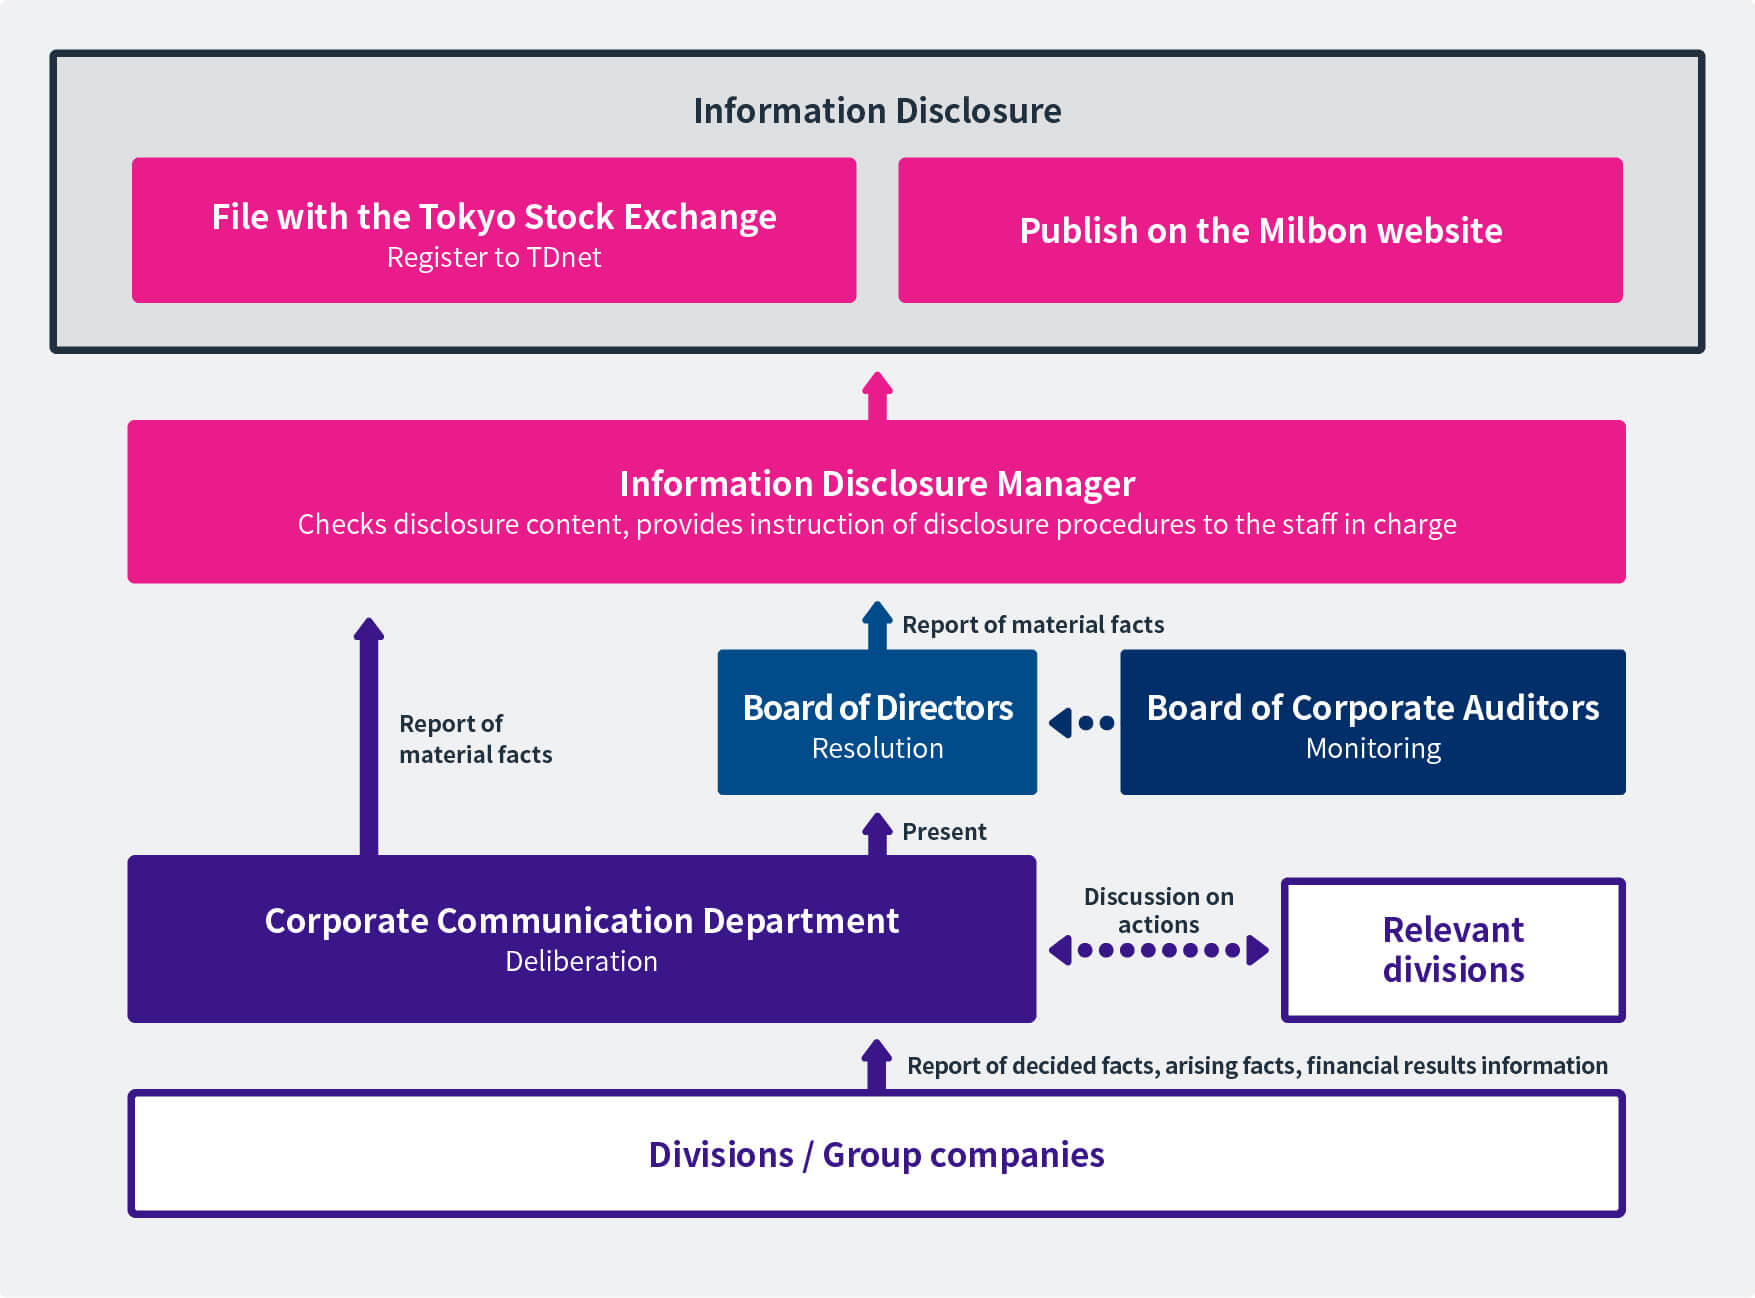 Outline of Information Disclosure System
